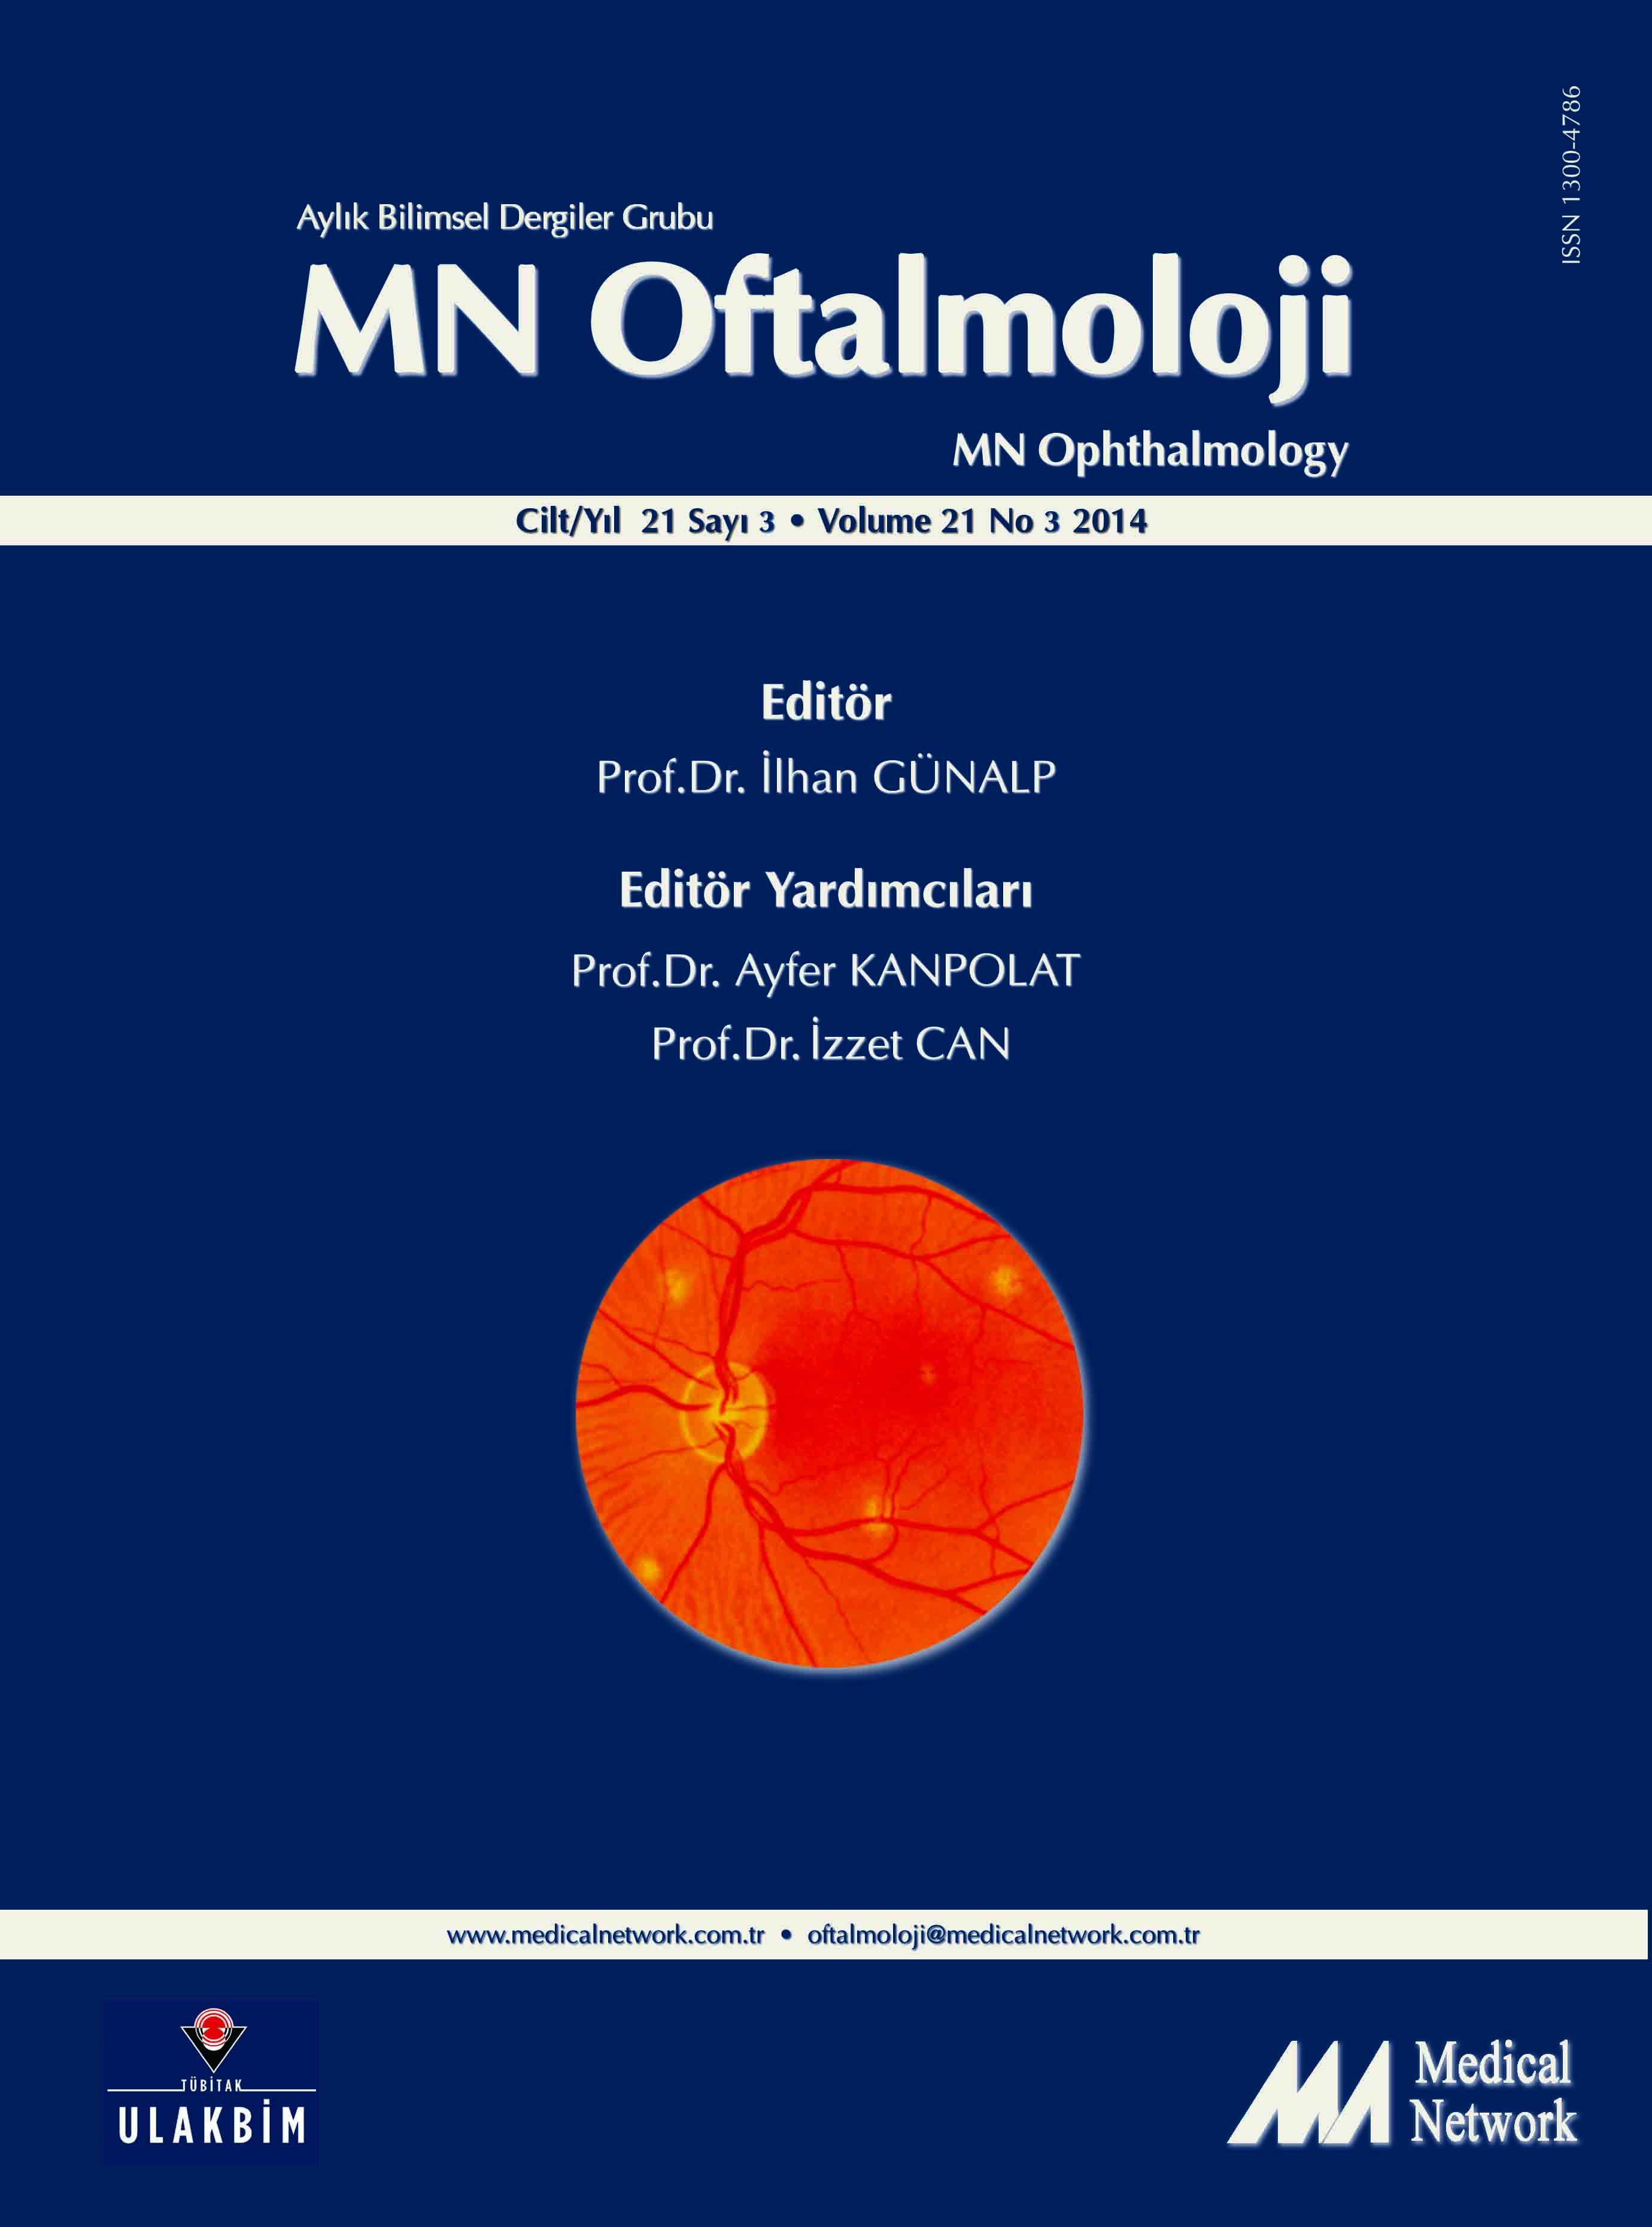 <p>MN Oftalmoloji Cilt: 21 Sayı: 3 2014 (MN Ophthalmology Volume: 21 No 3 2014)</p>